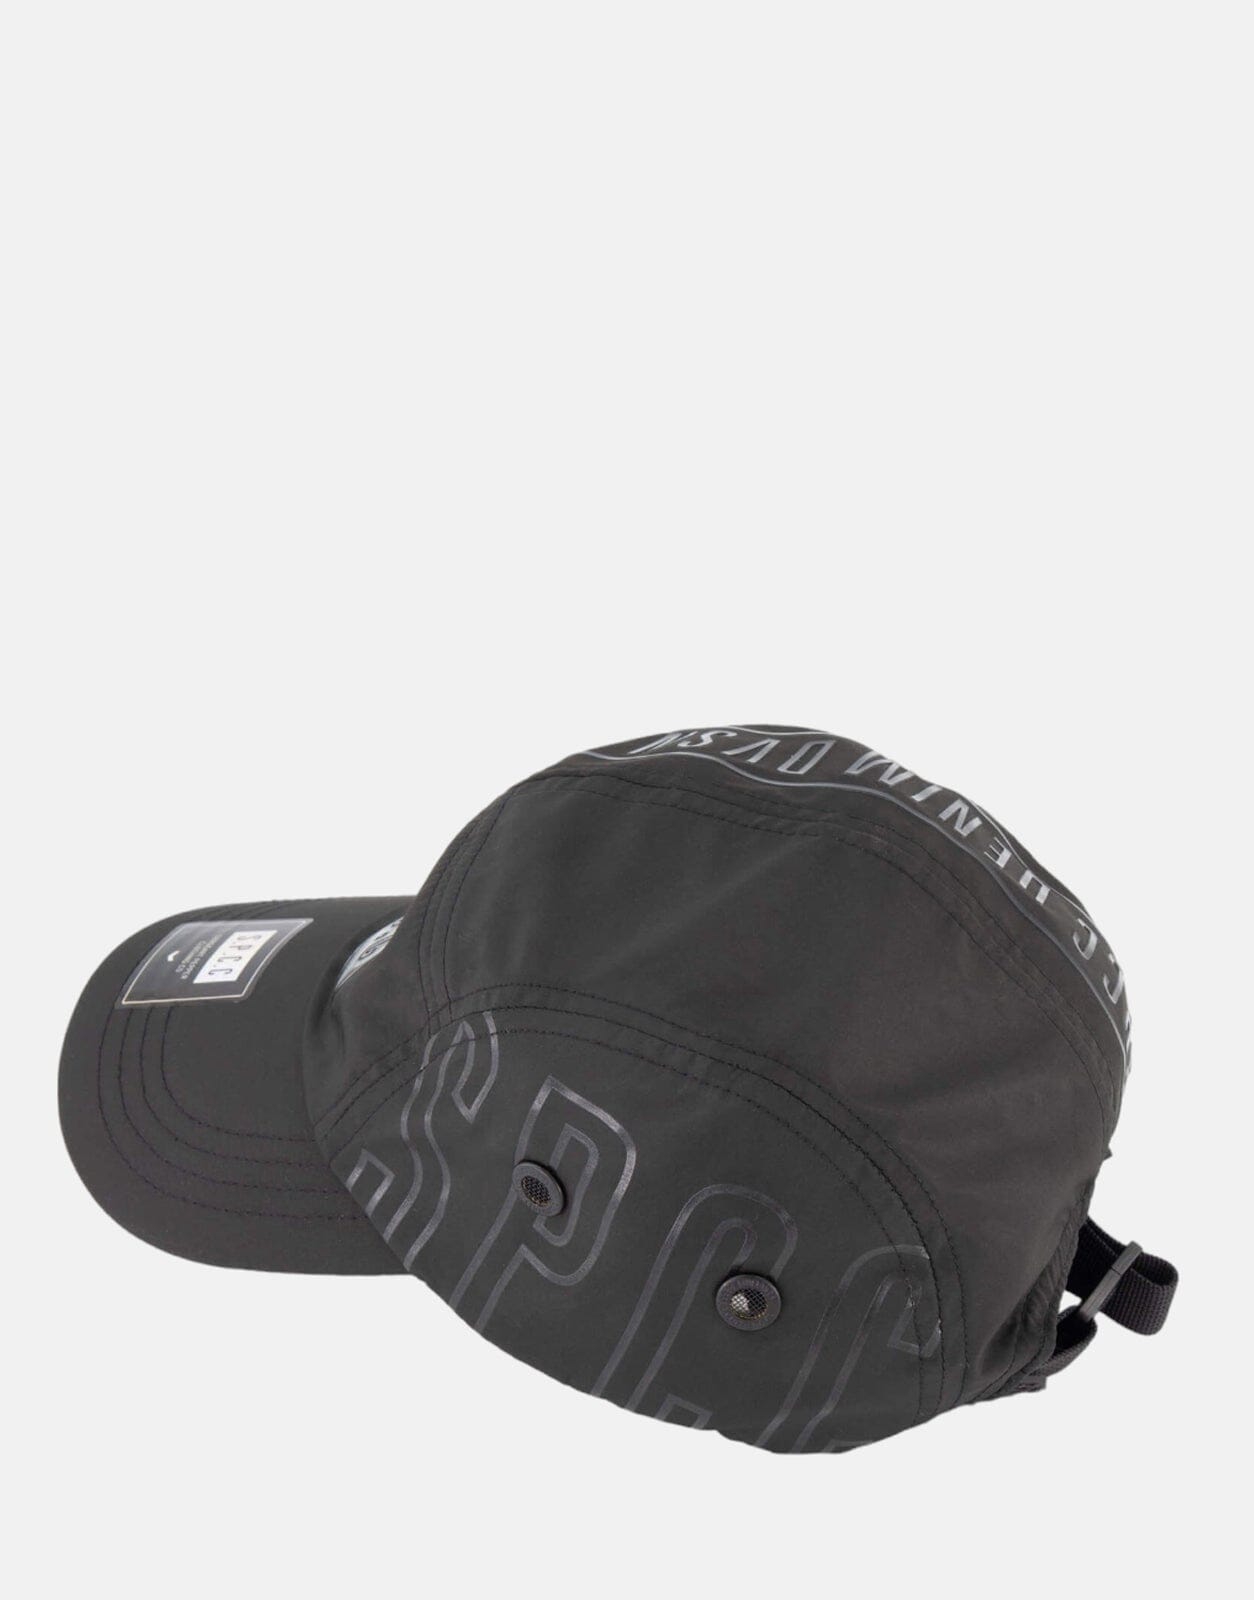 SPCC Silko Black Cap - Subwear